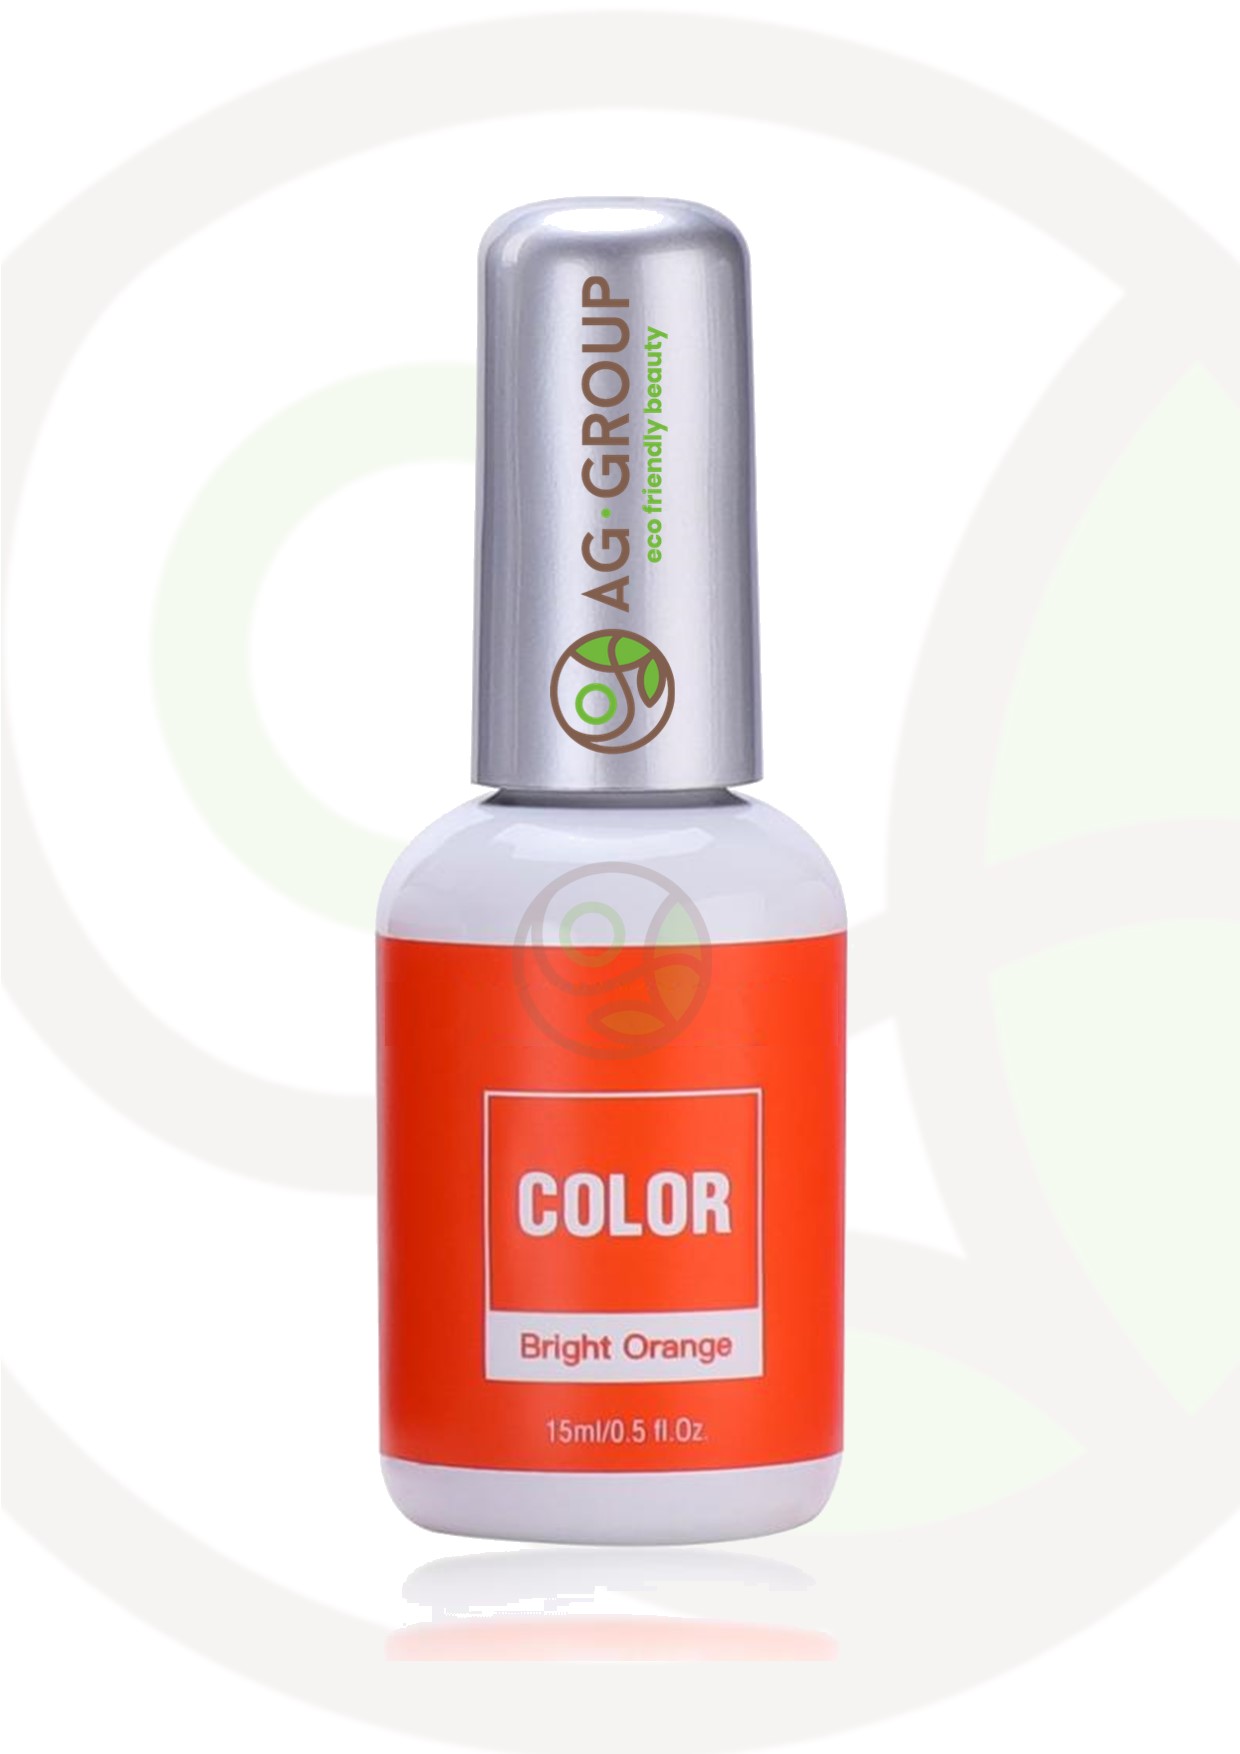 Featured image for “Gel polish soak -off led/uv- color bright orange”